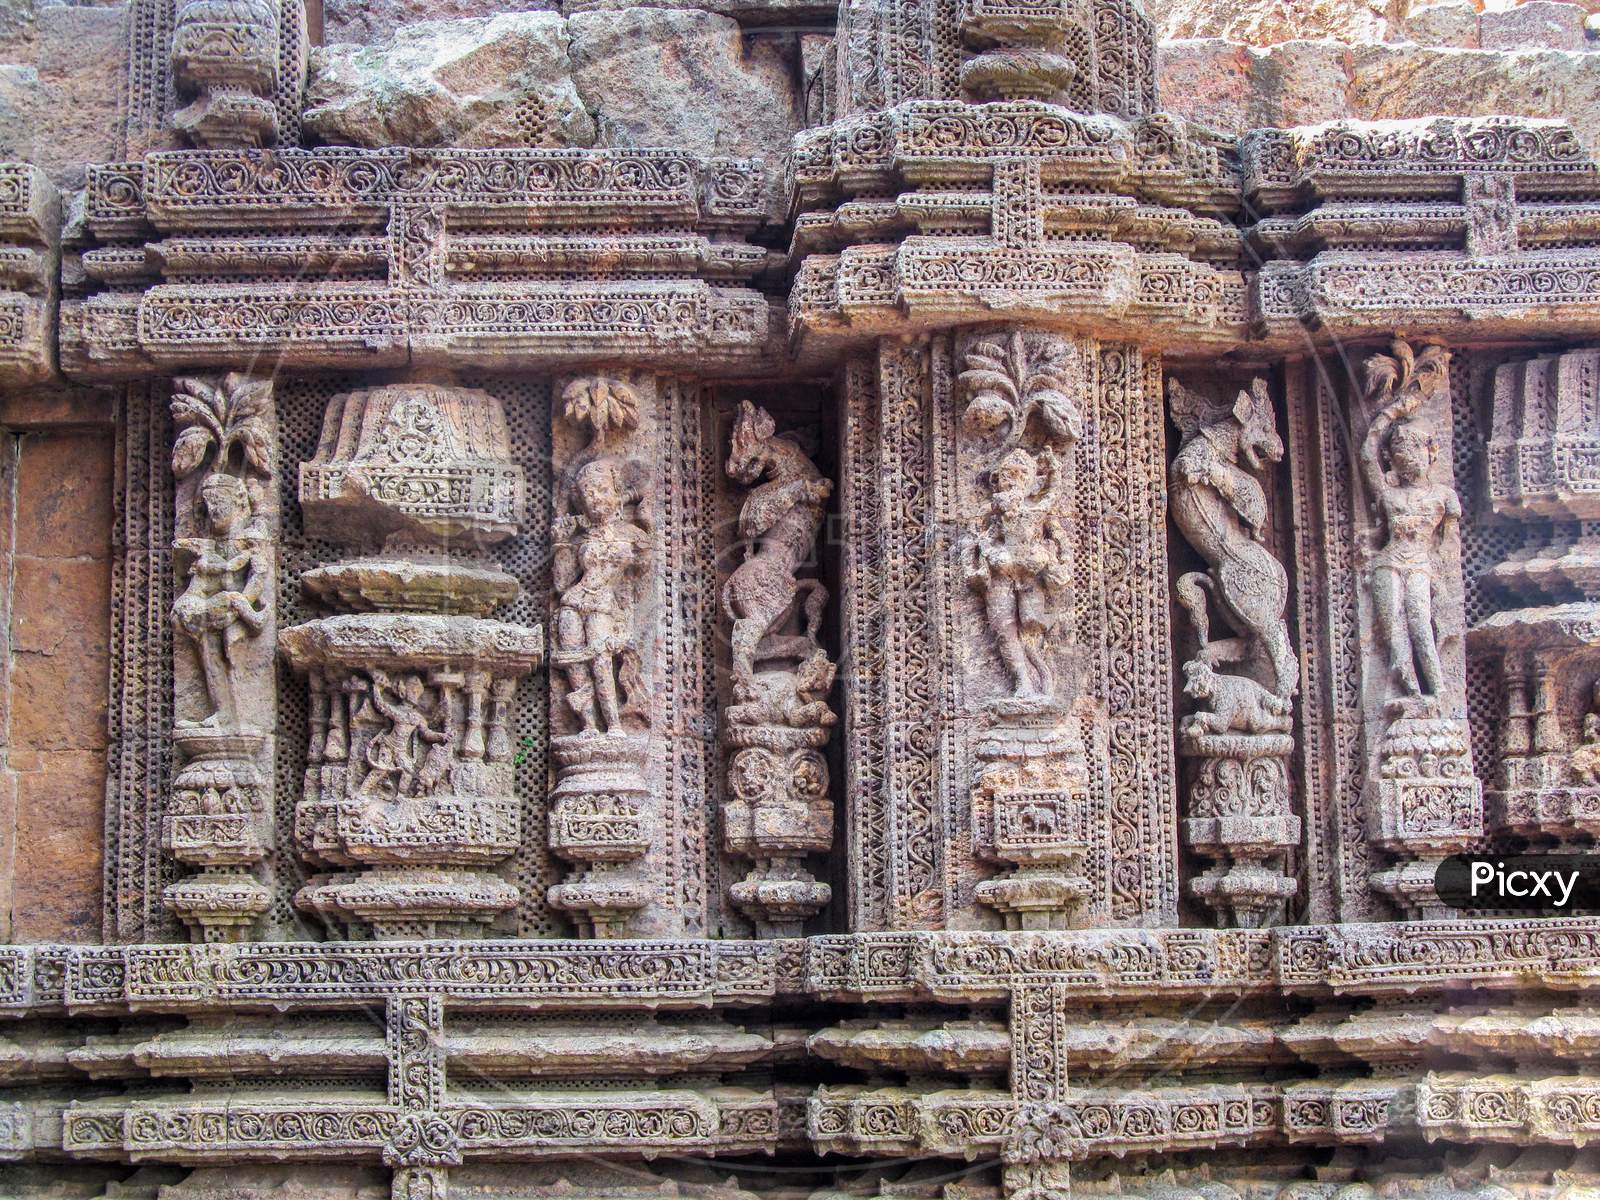 Stone carving at Konark Sun temple